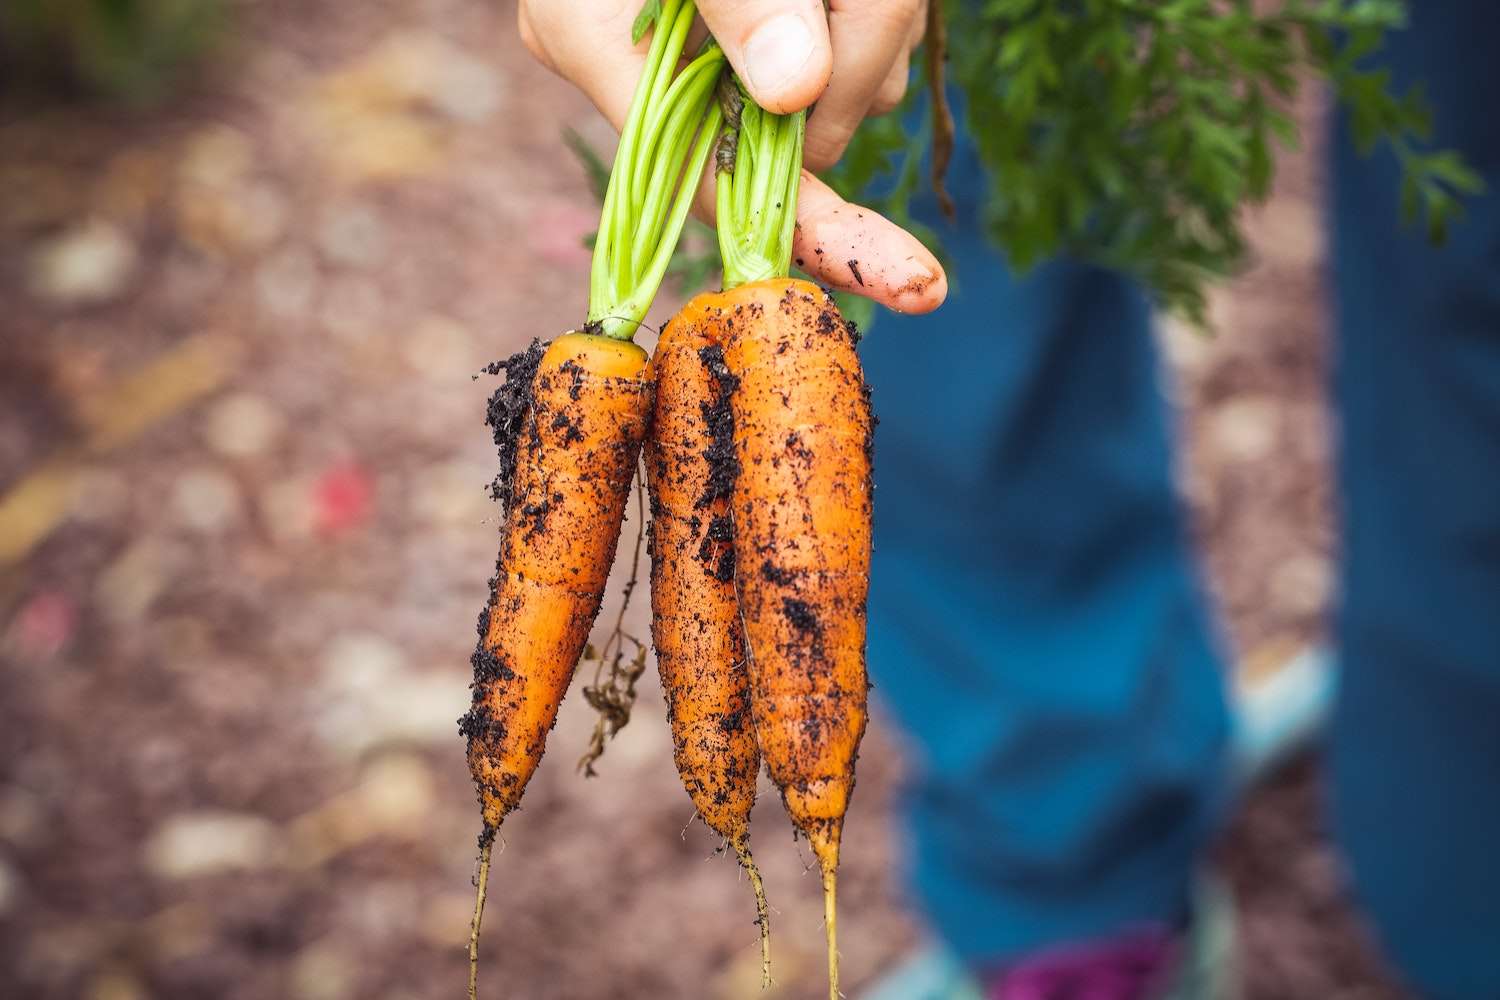 A carrot growing in the garden